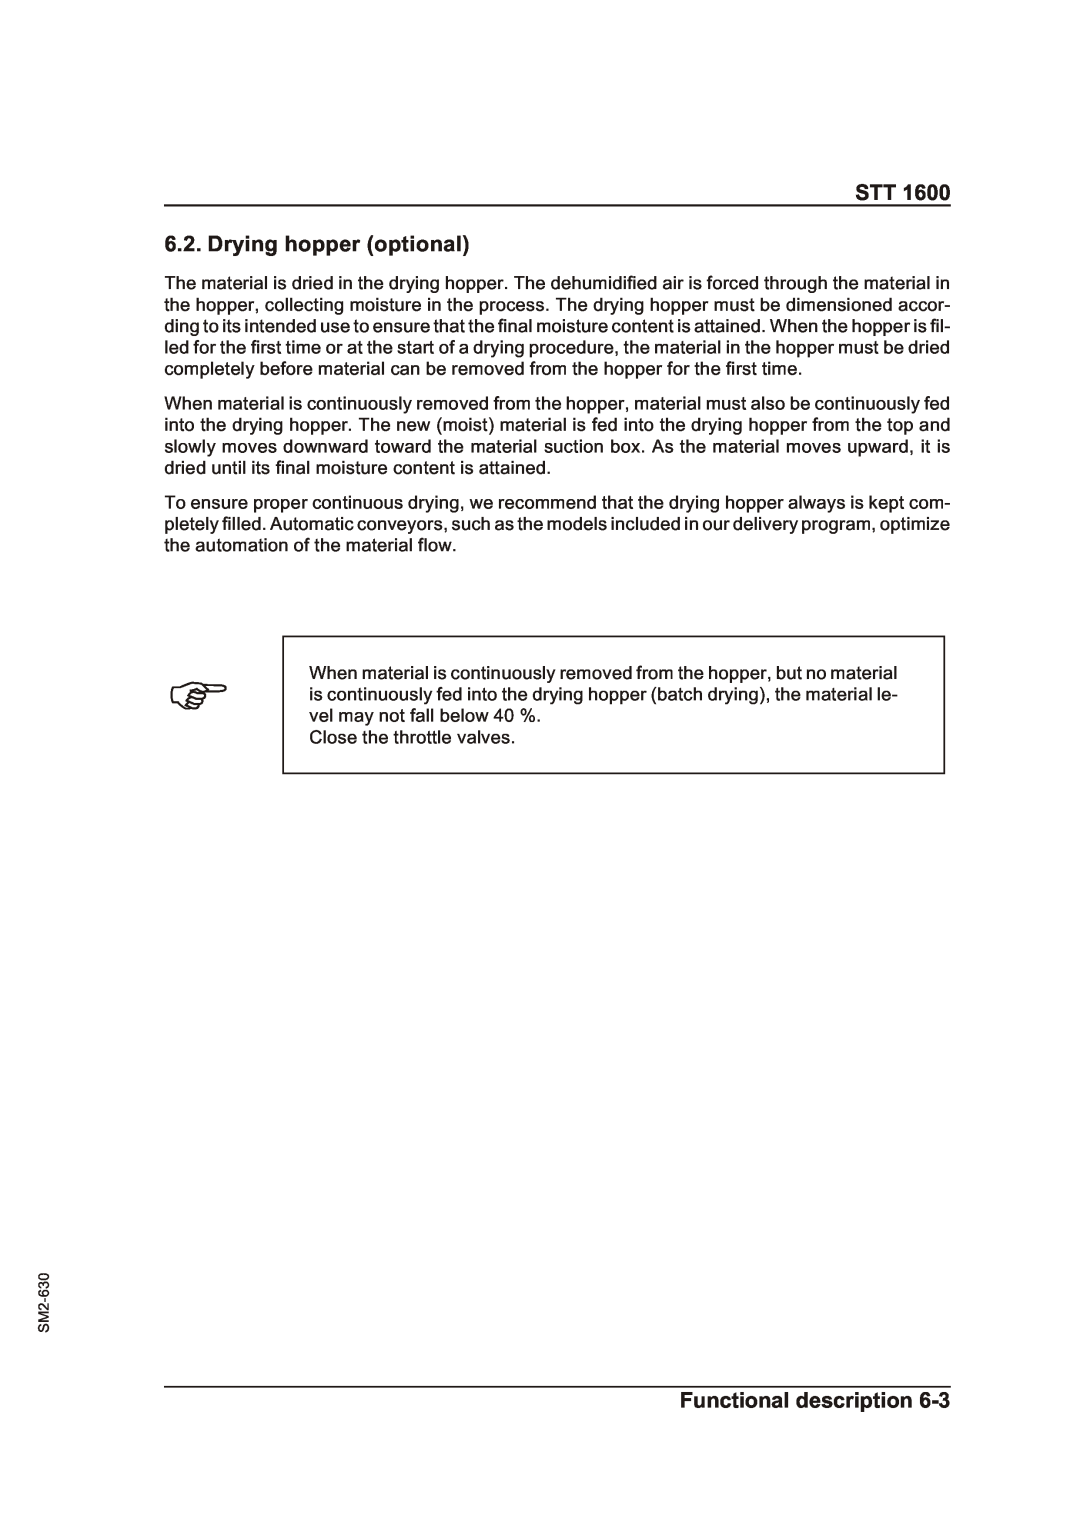 Sterling STT 1600 operating instructions STT 6.2. Drying hopper optional, Functional description 